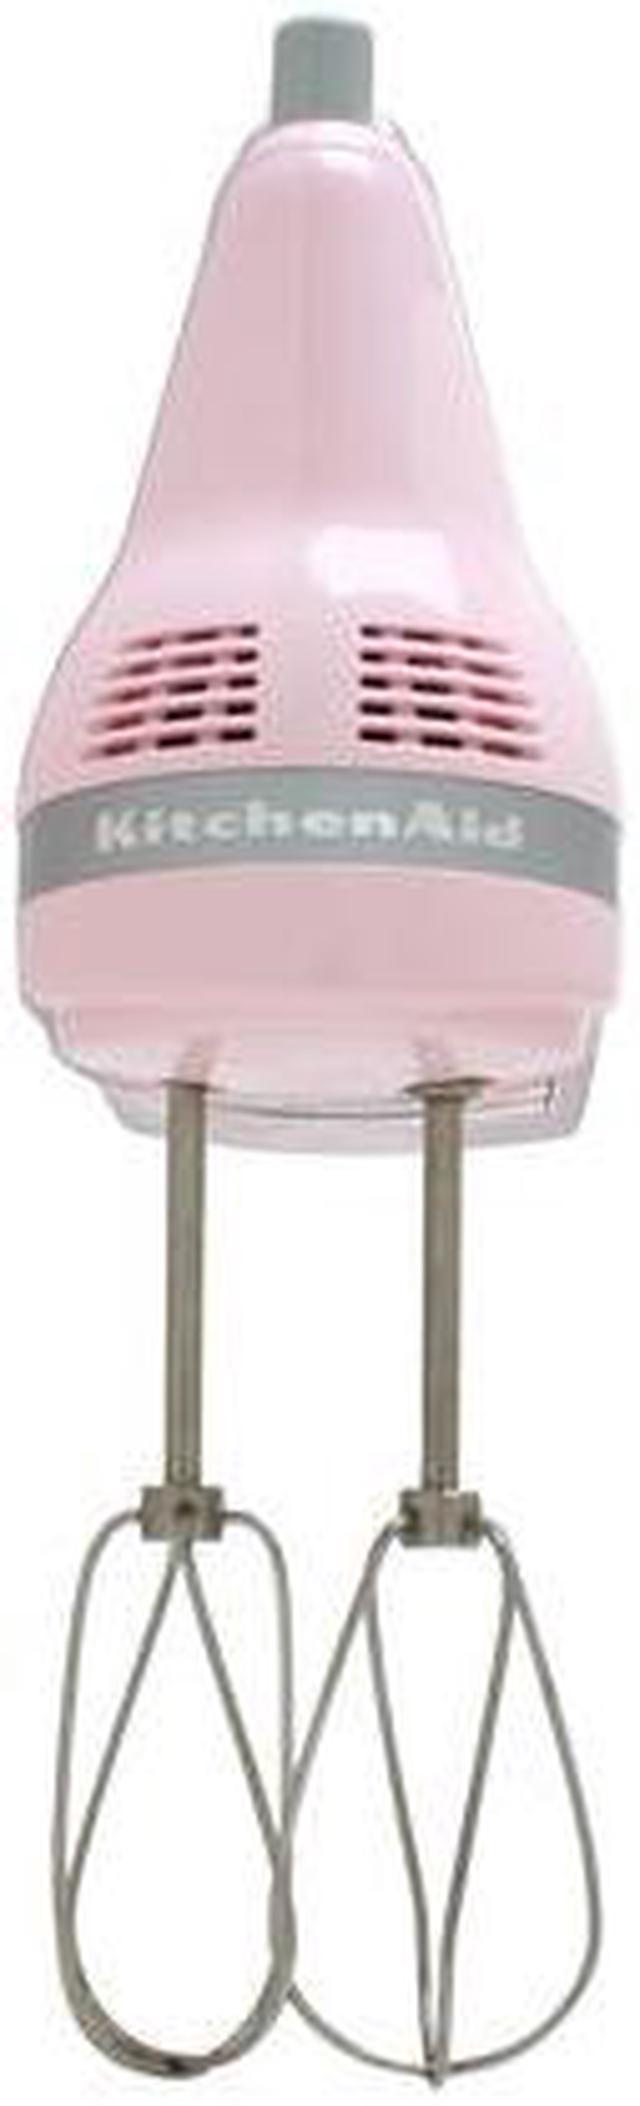 KitchenAid KHM7TPK Ultra Power Plus 7-Speed Hand Mixer Pink